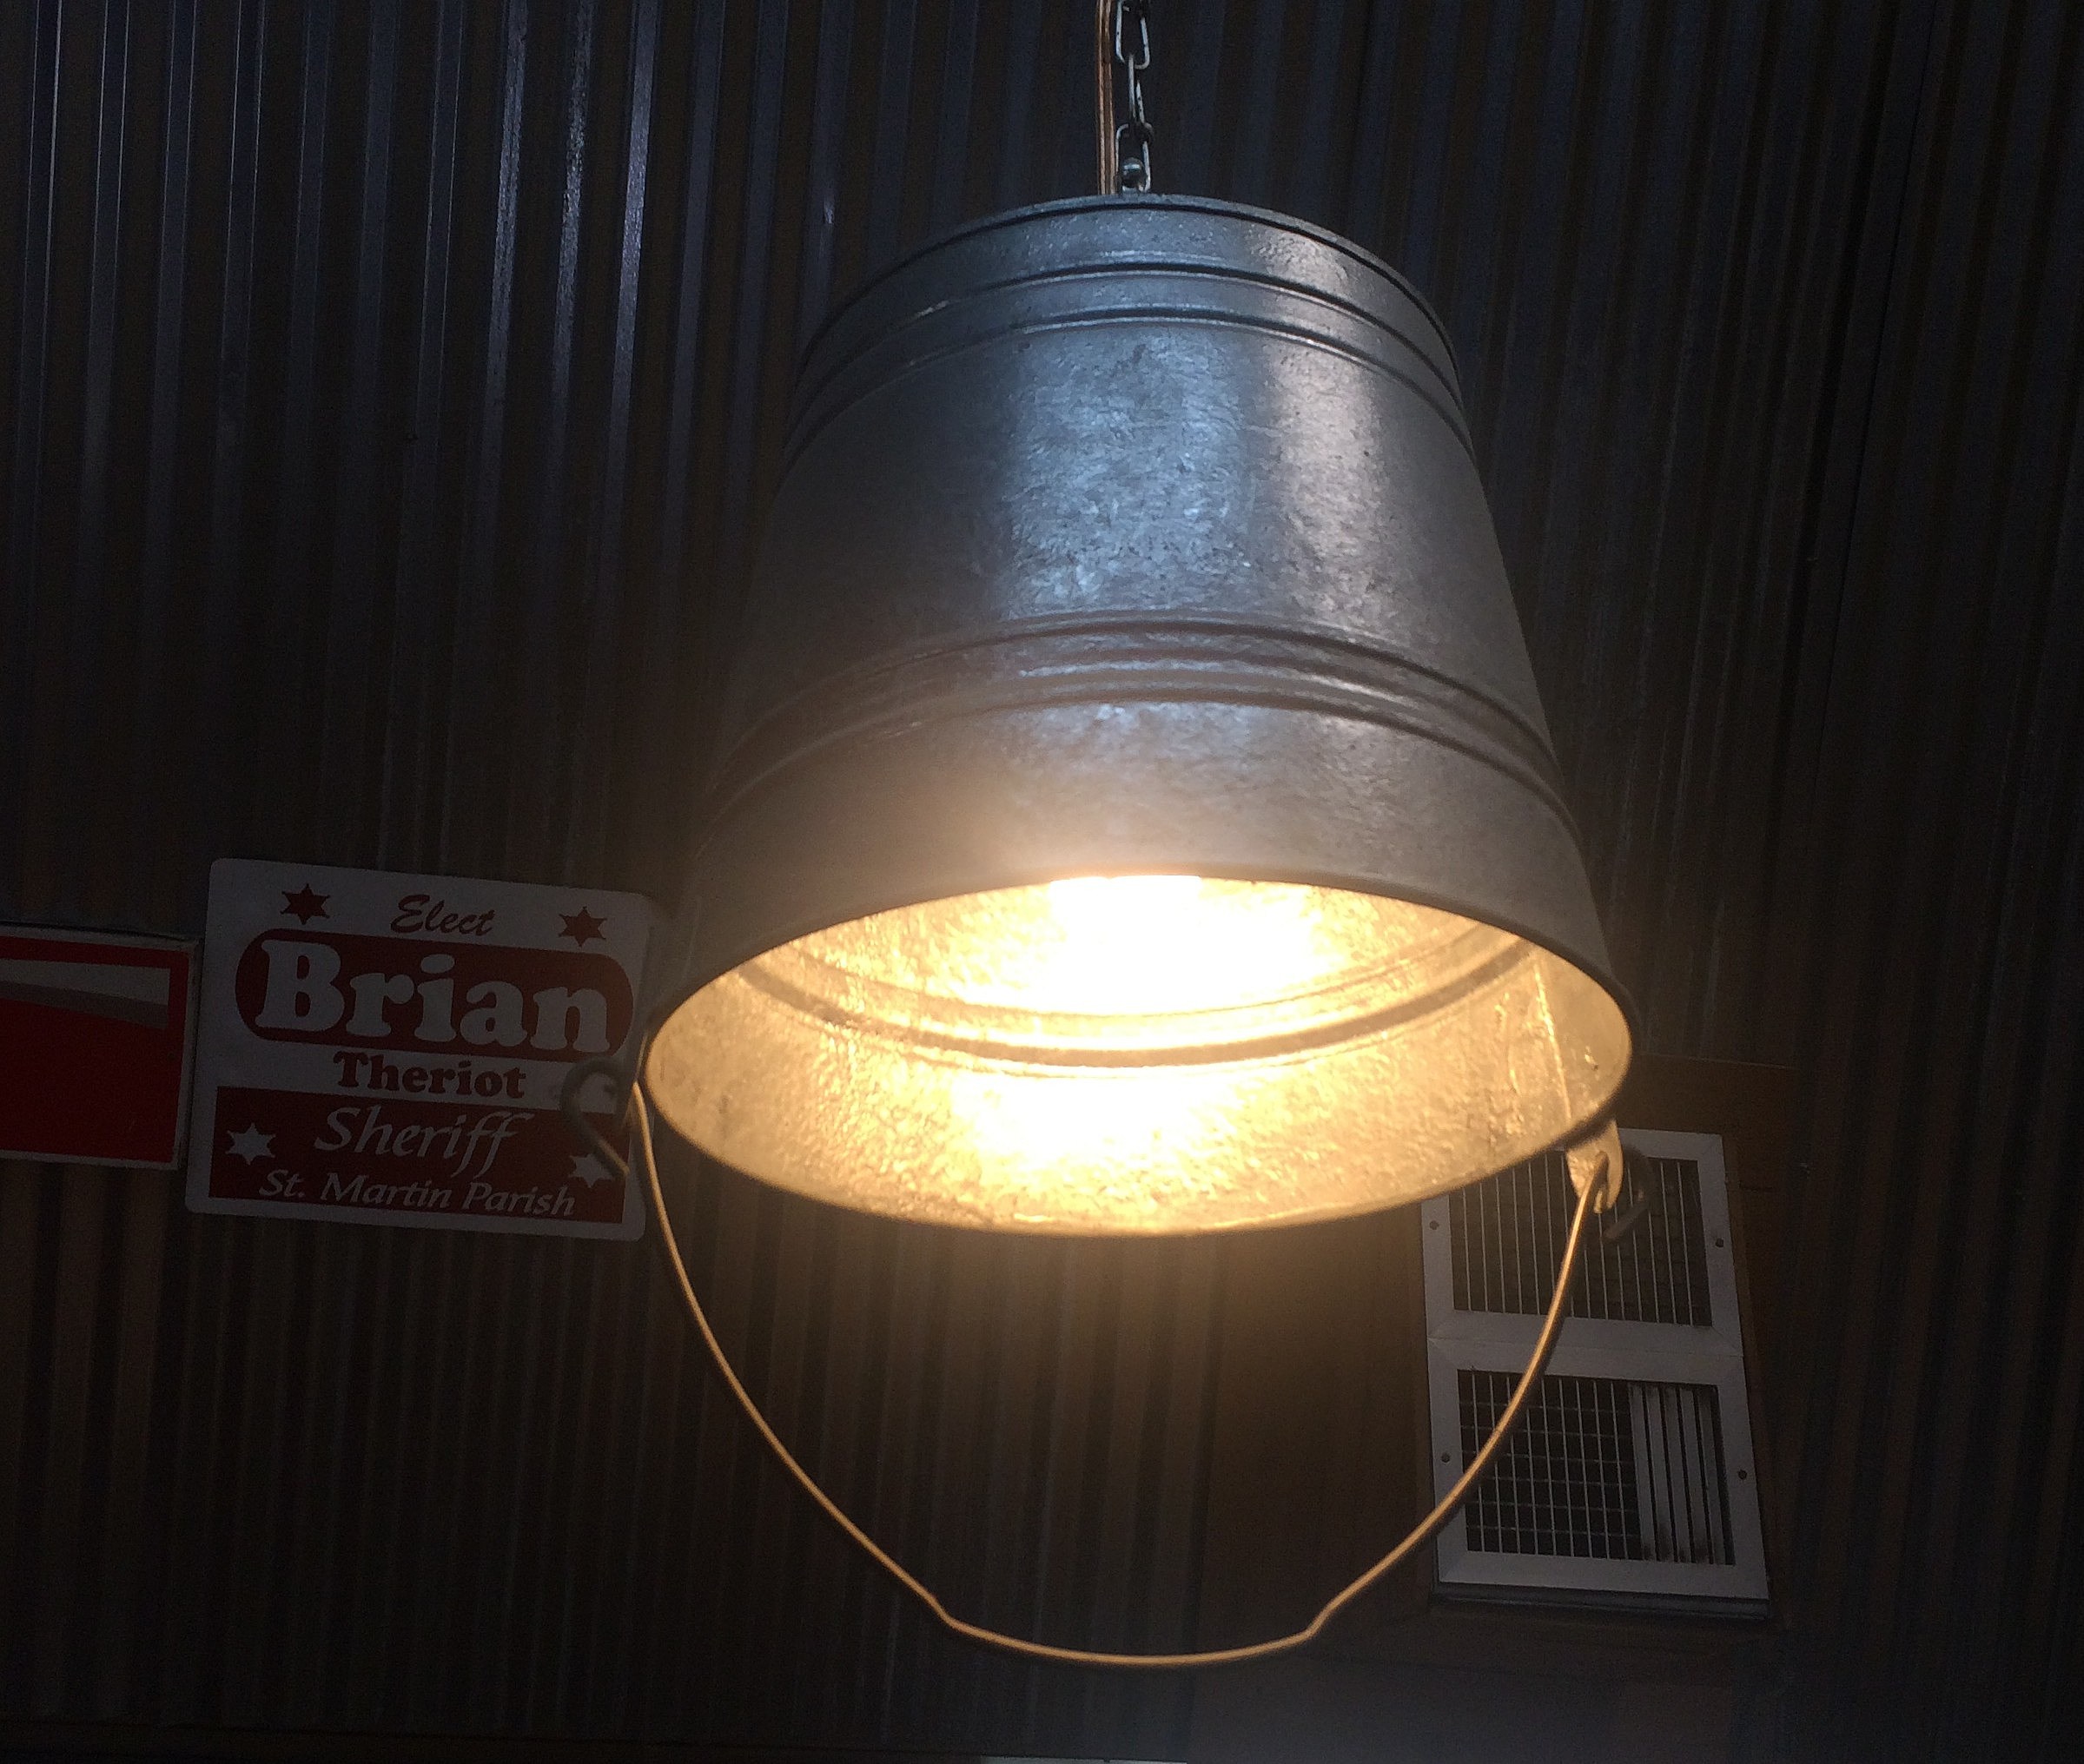 Unique Bucket Light Fixture Idea [PHOTO]